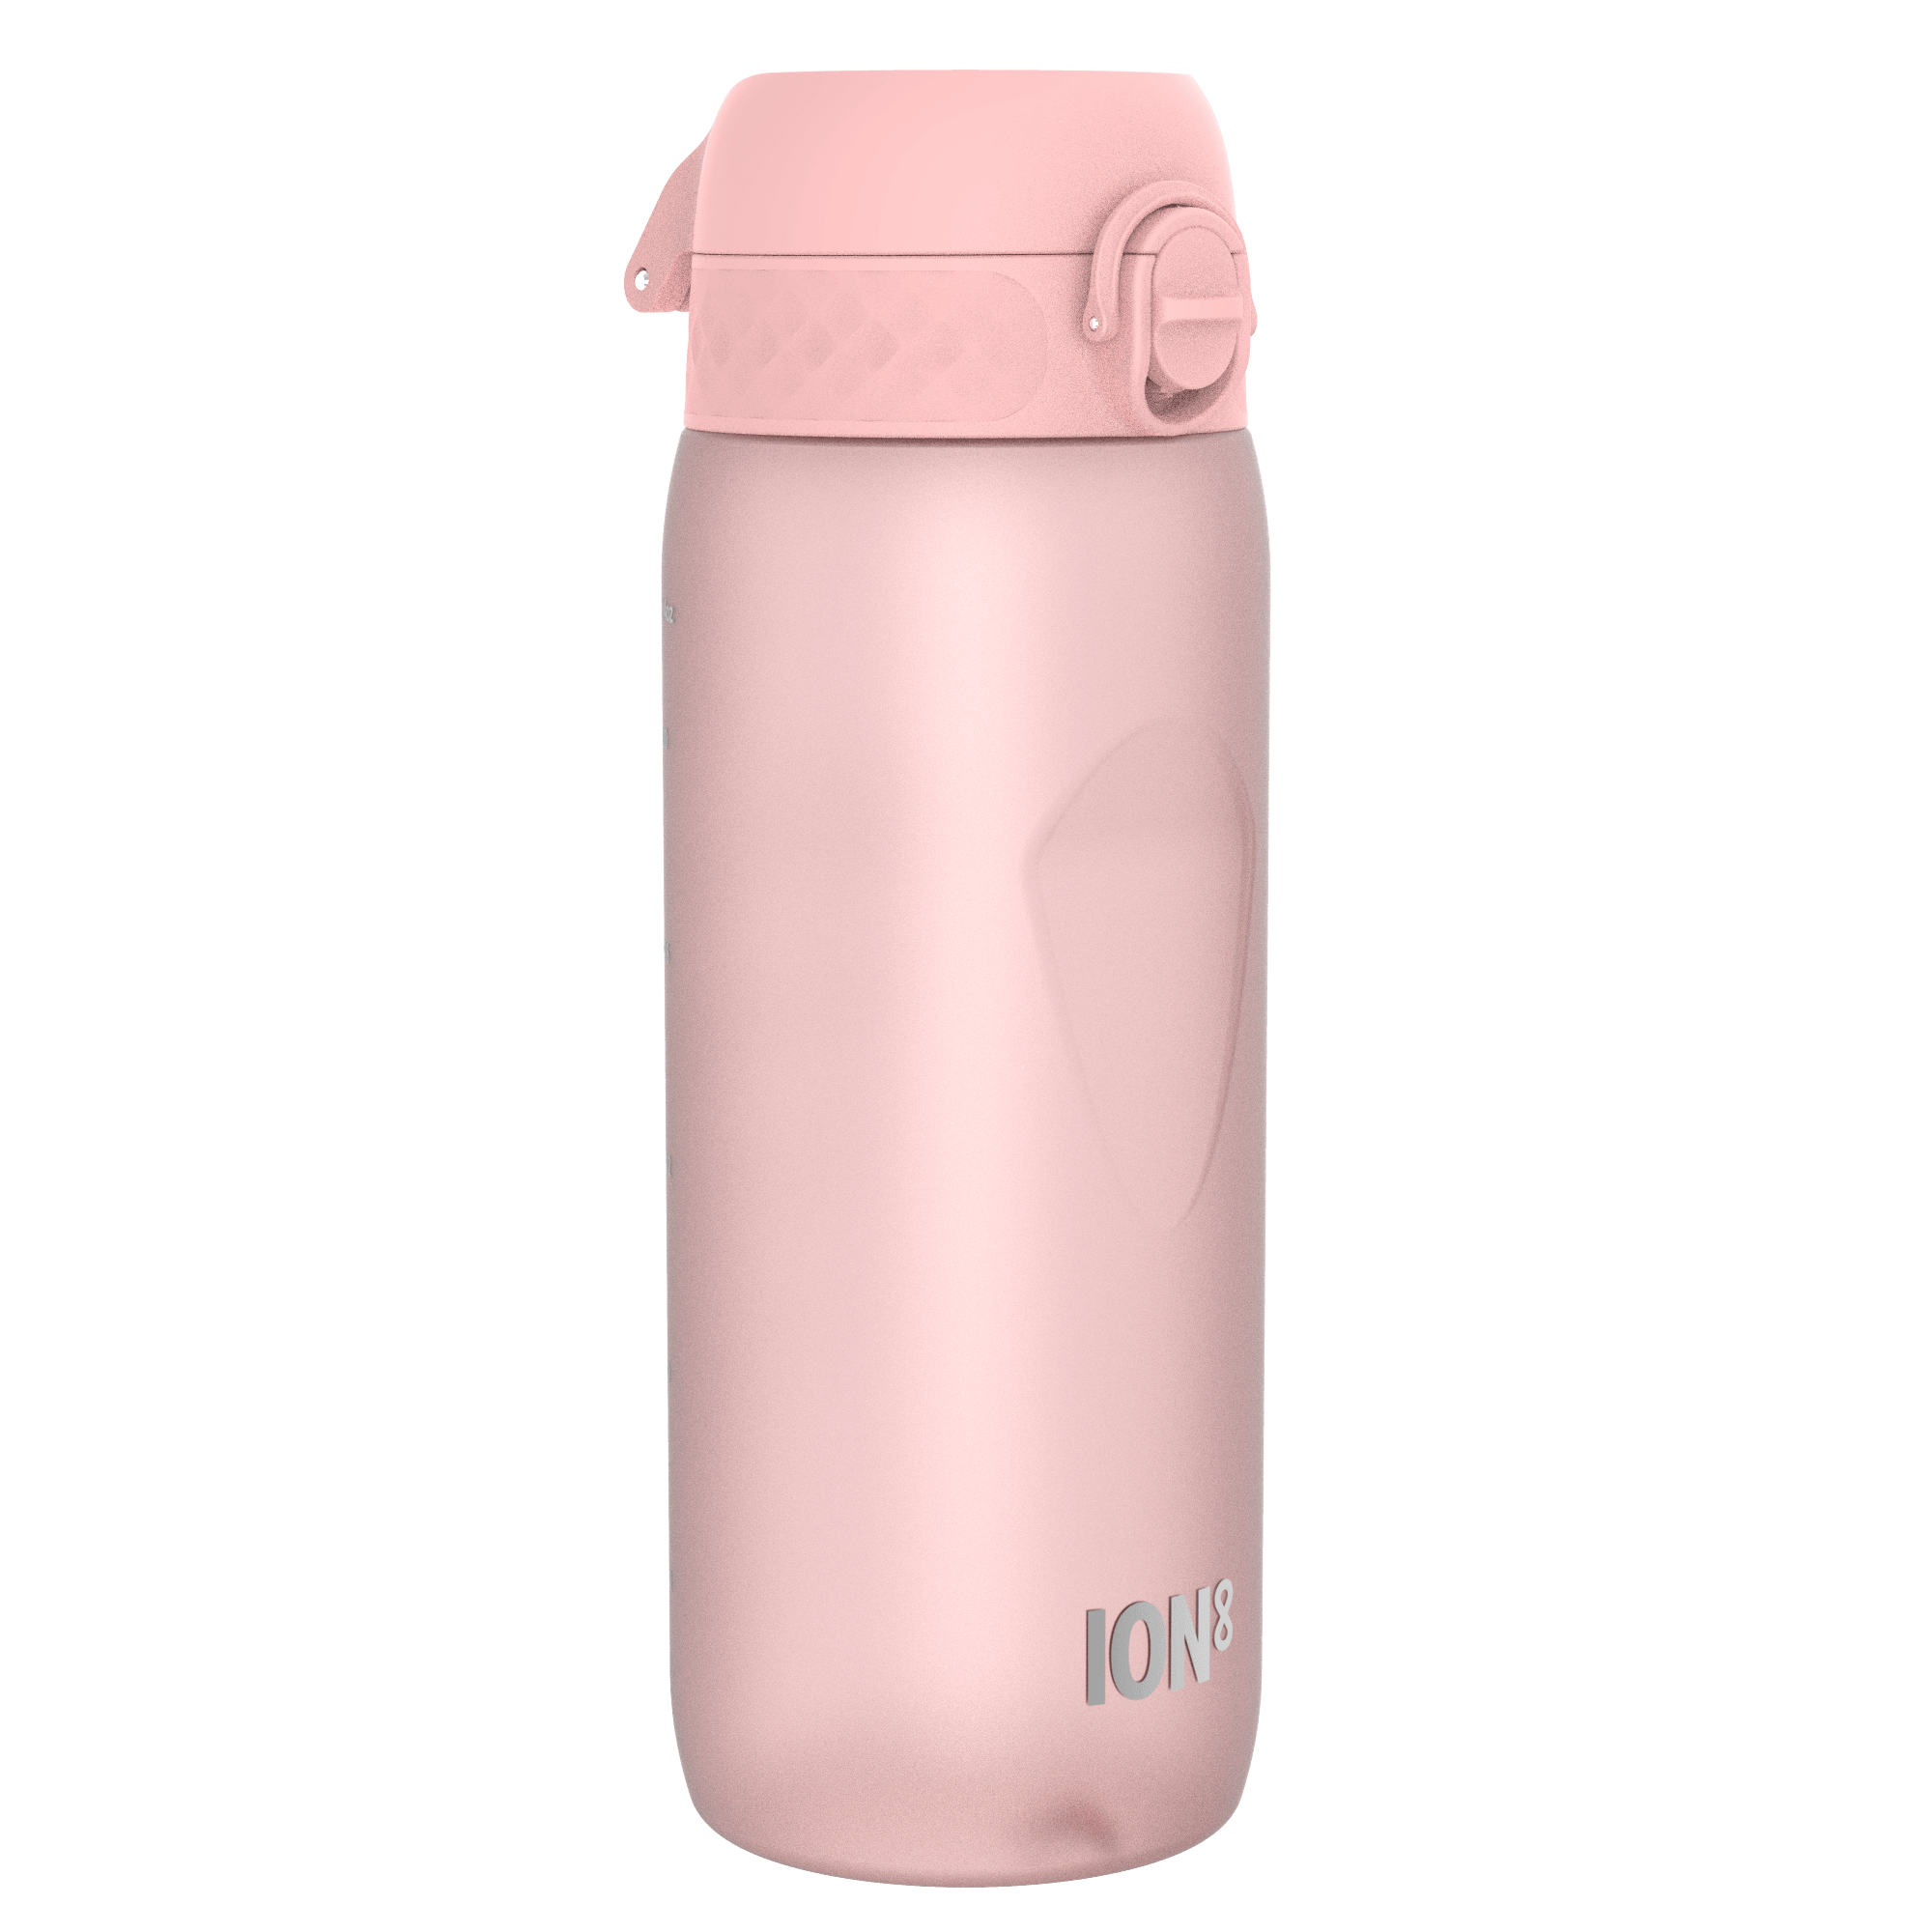 Ion8: butelka Cycling Water Bottle 750 ml - Noski Noski